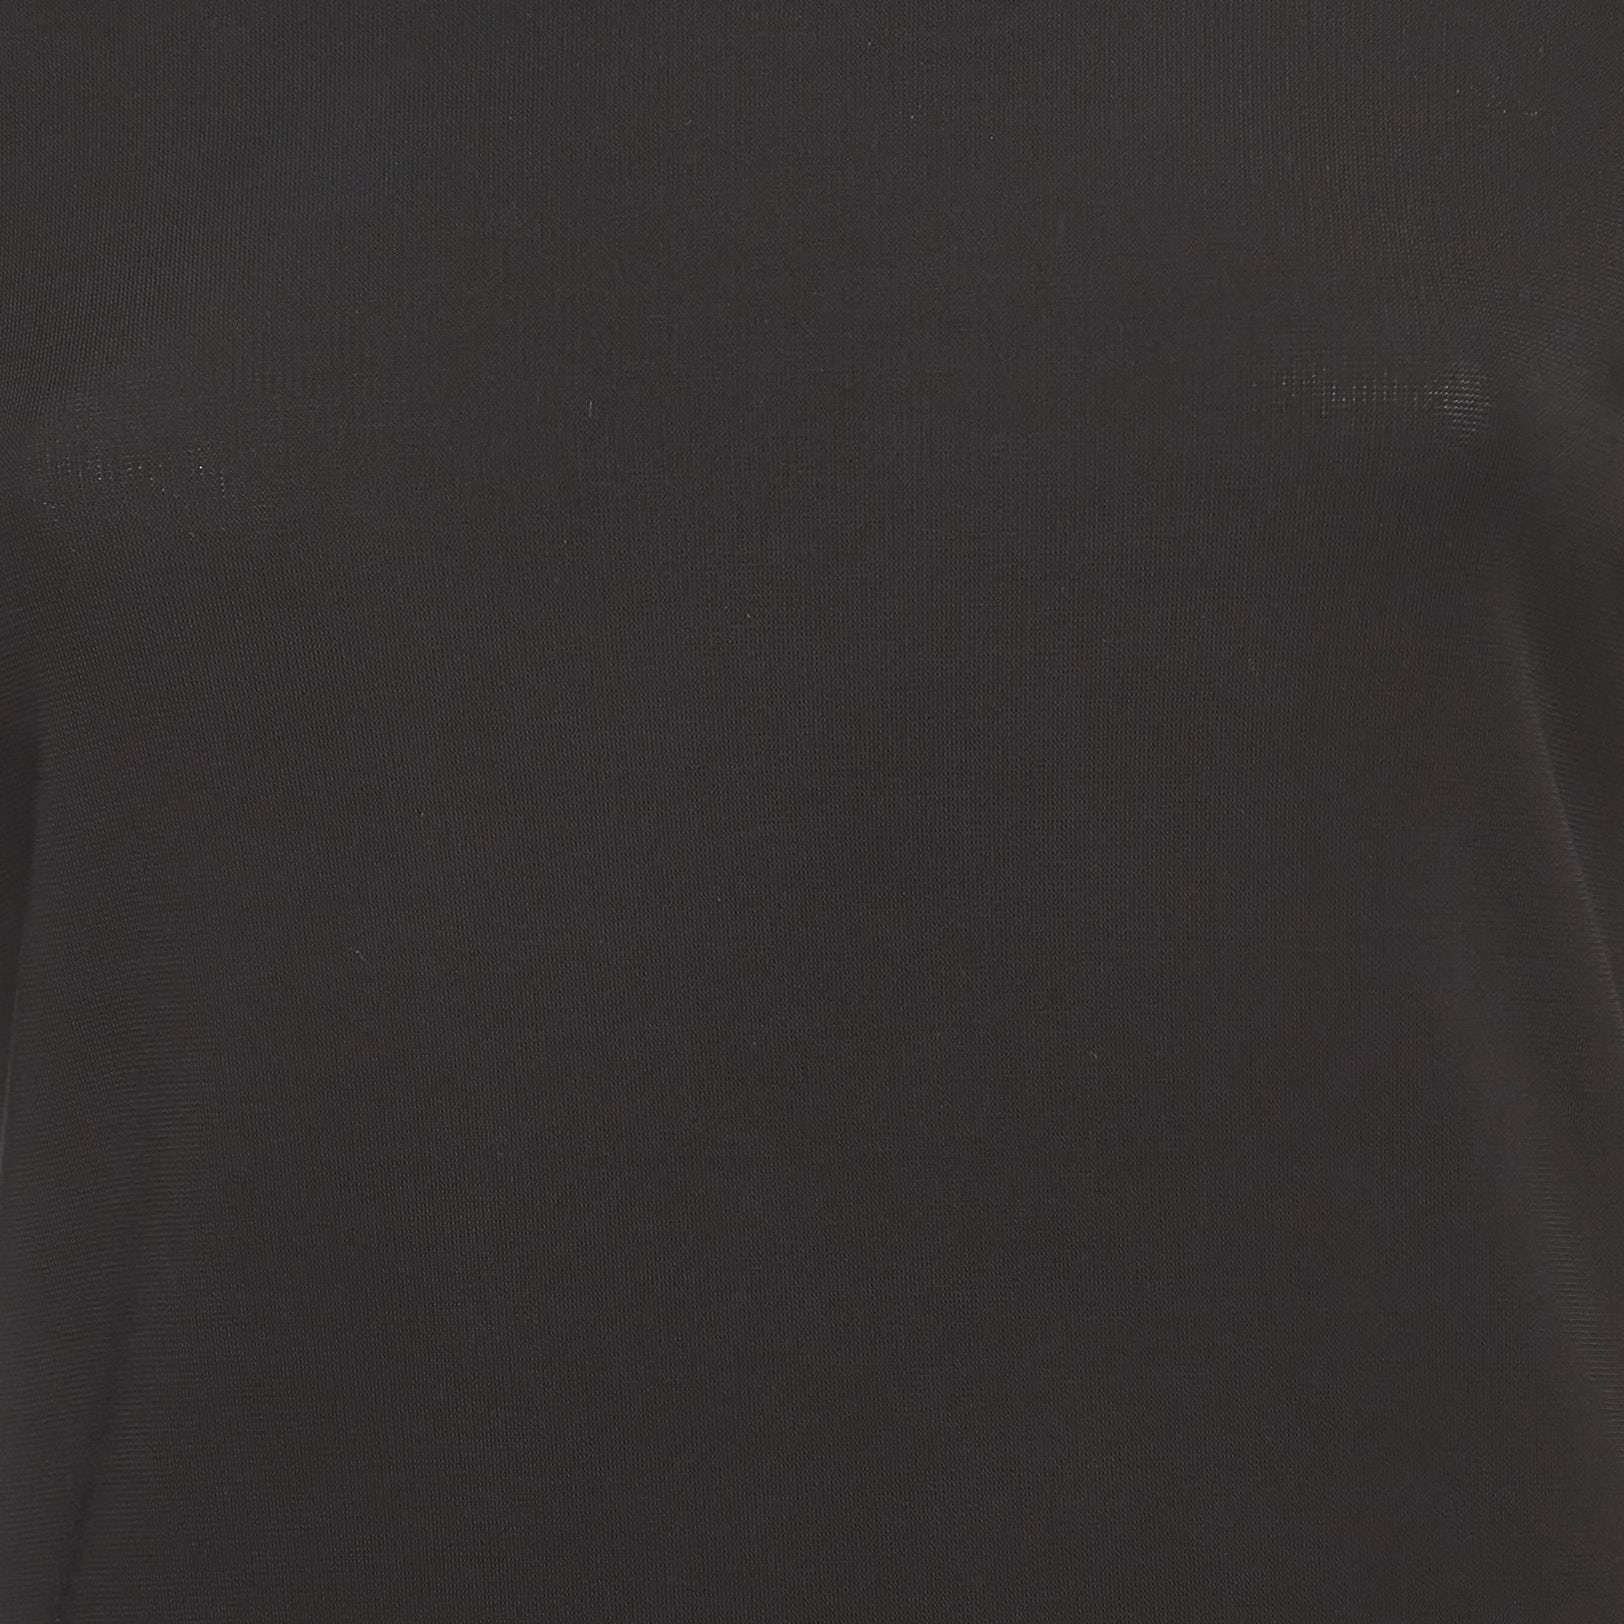 Burberry Black Viscose Chain Fringe Detail Dress S